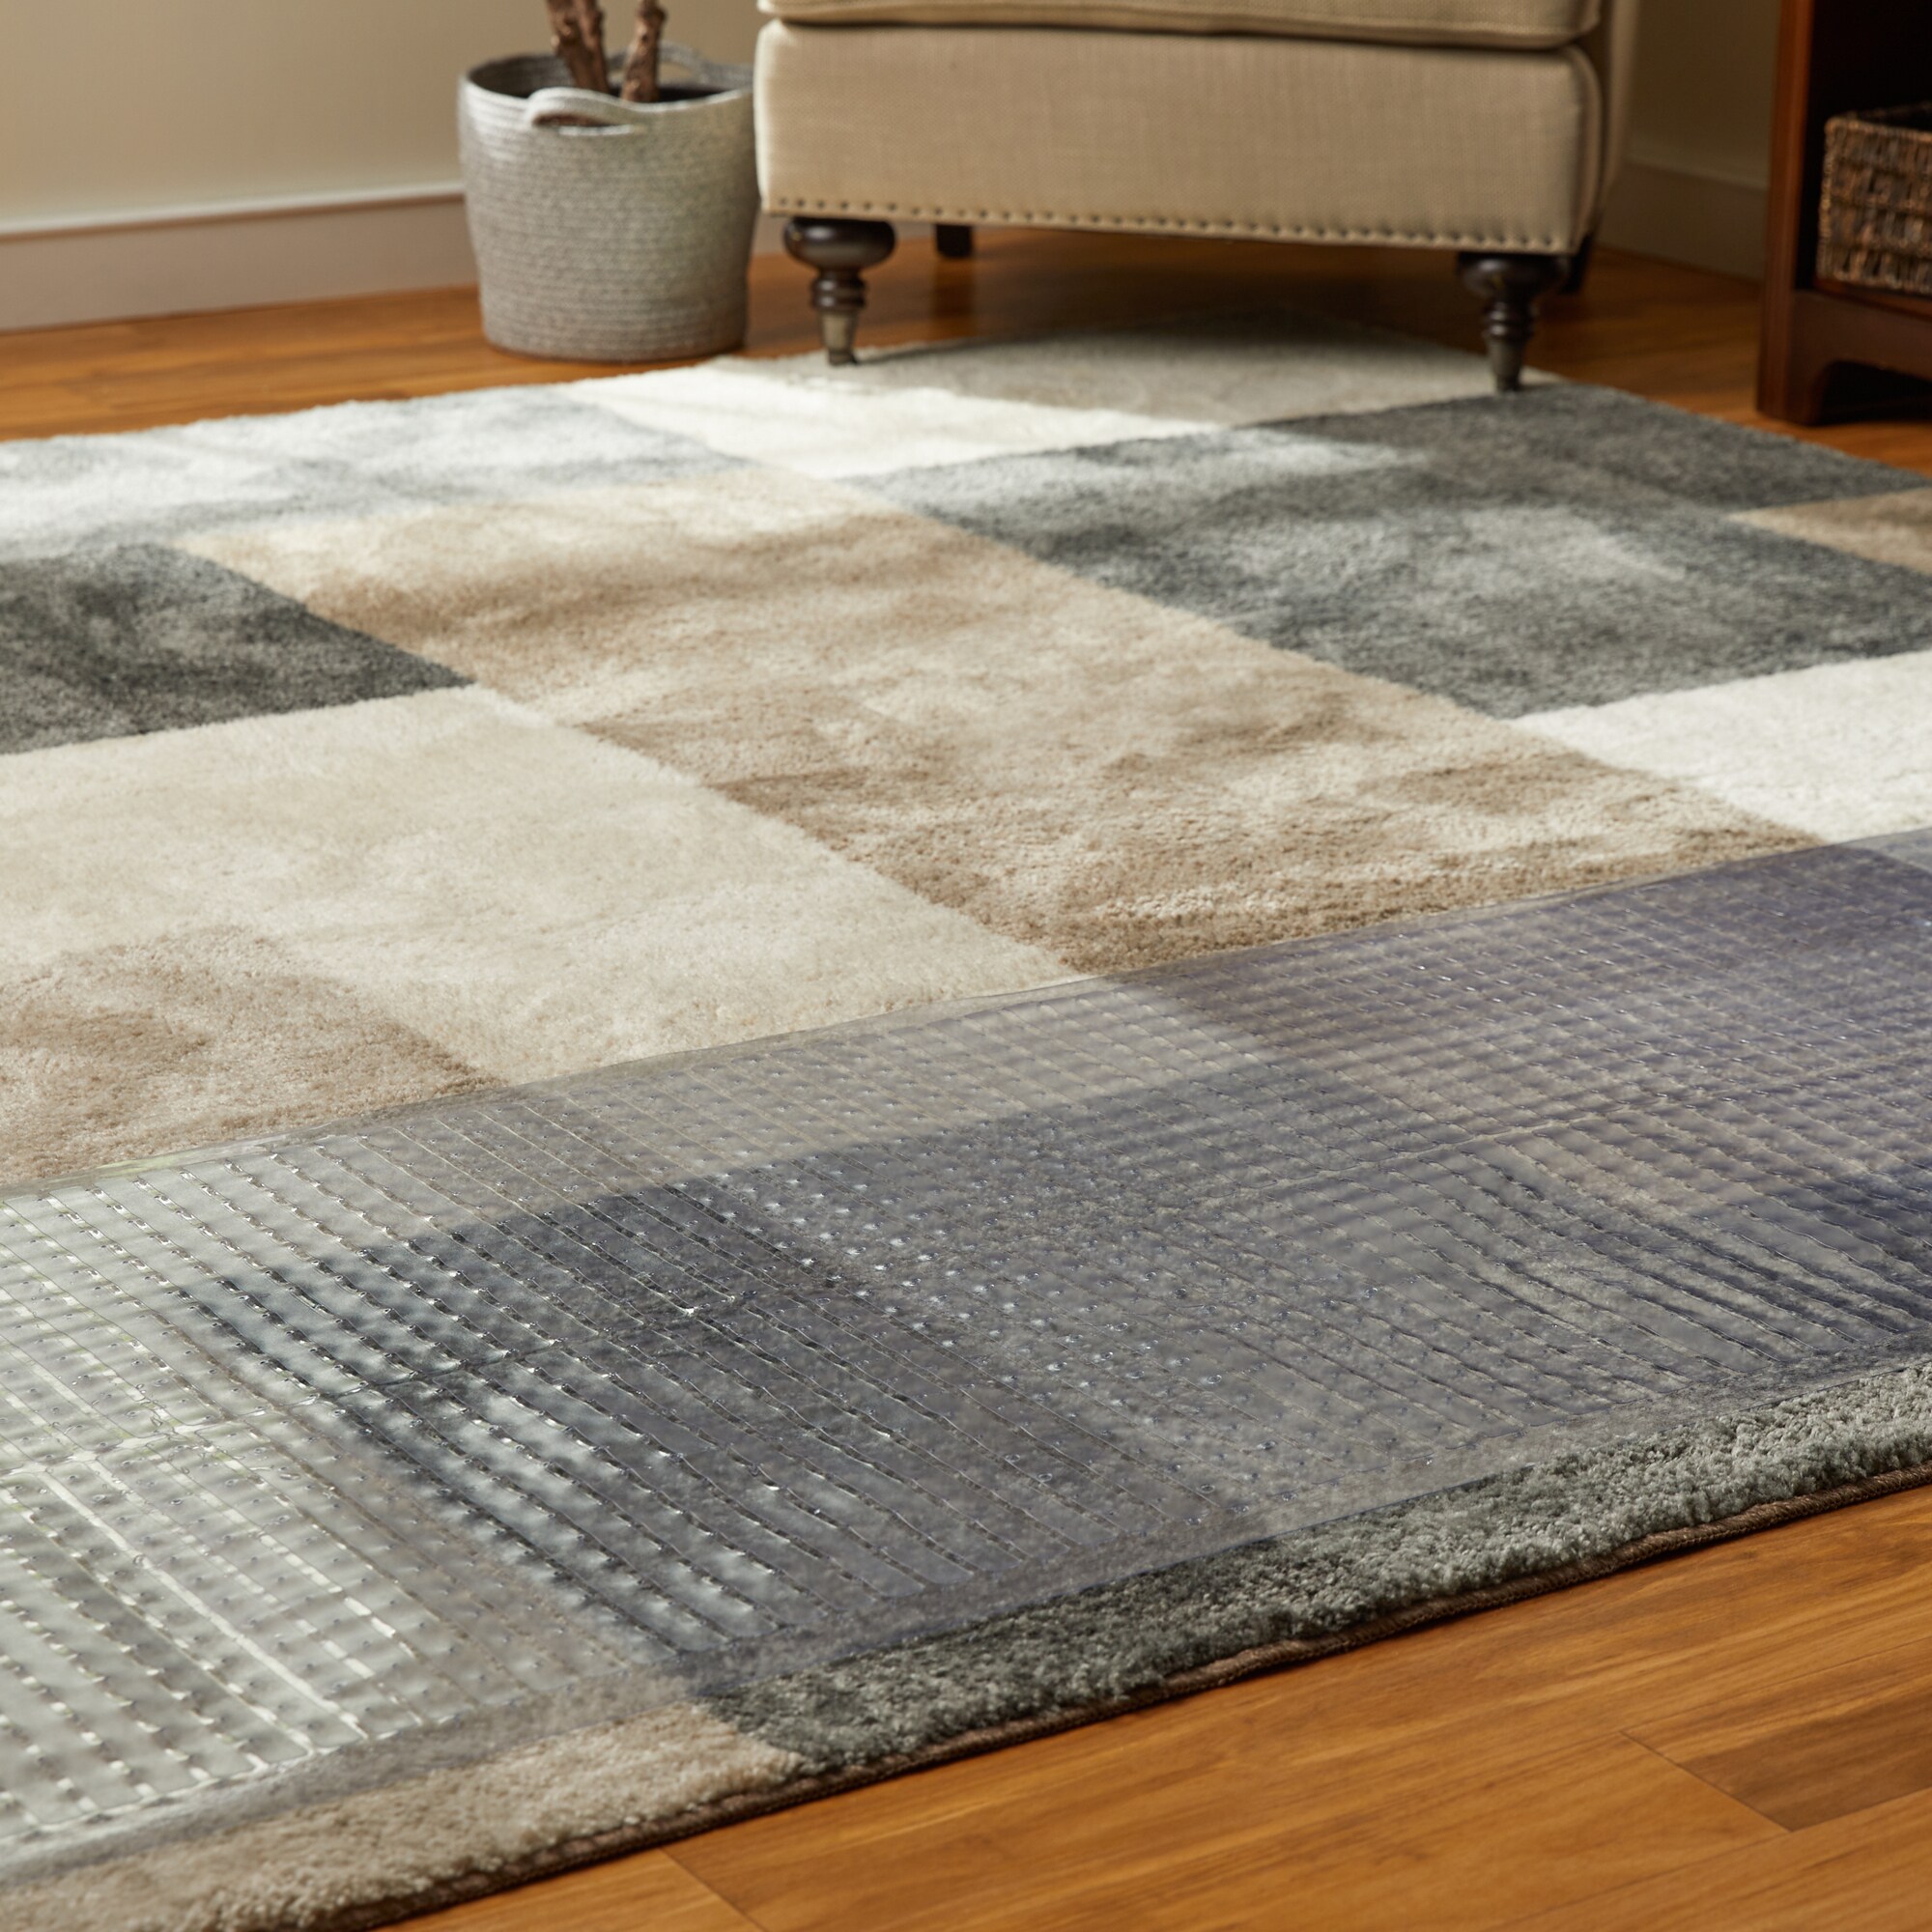 Clear Calder Vinyl Carpet Mats Guard Protector Home Office Sheet 10ft x 27inches 